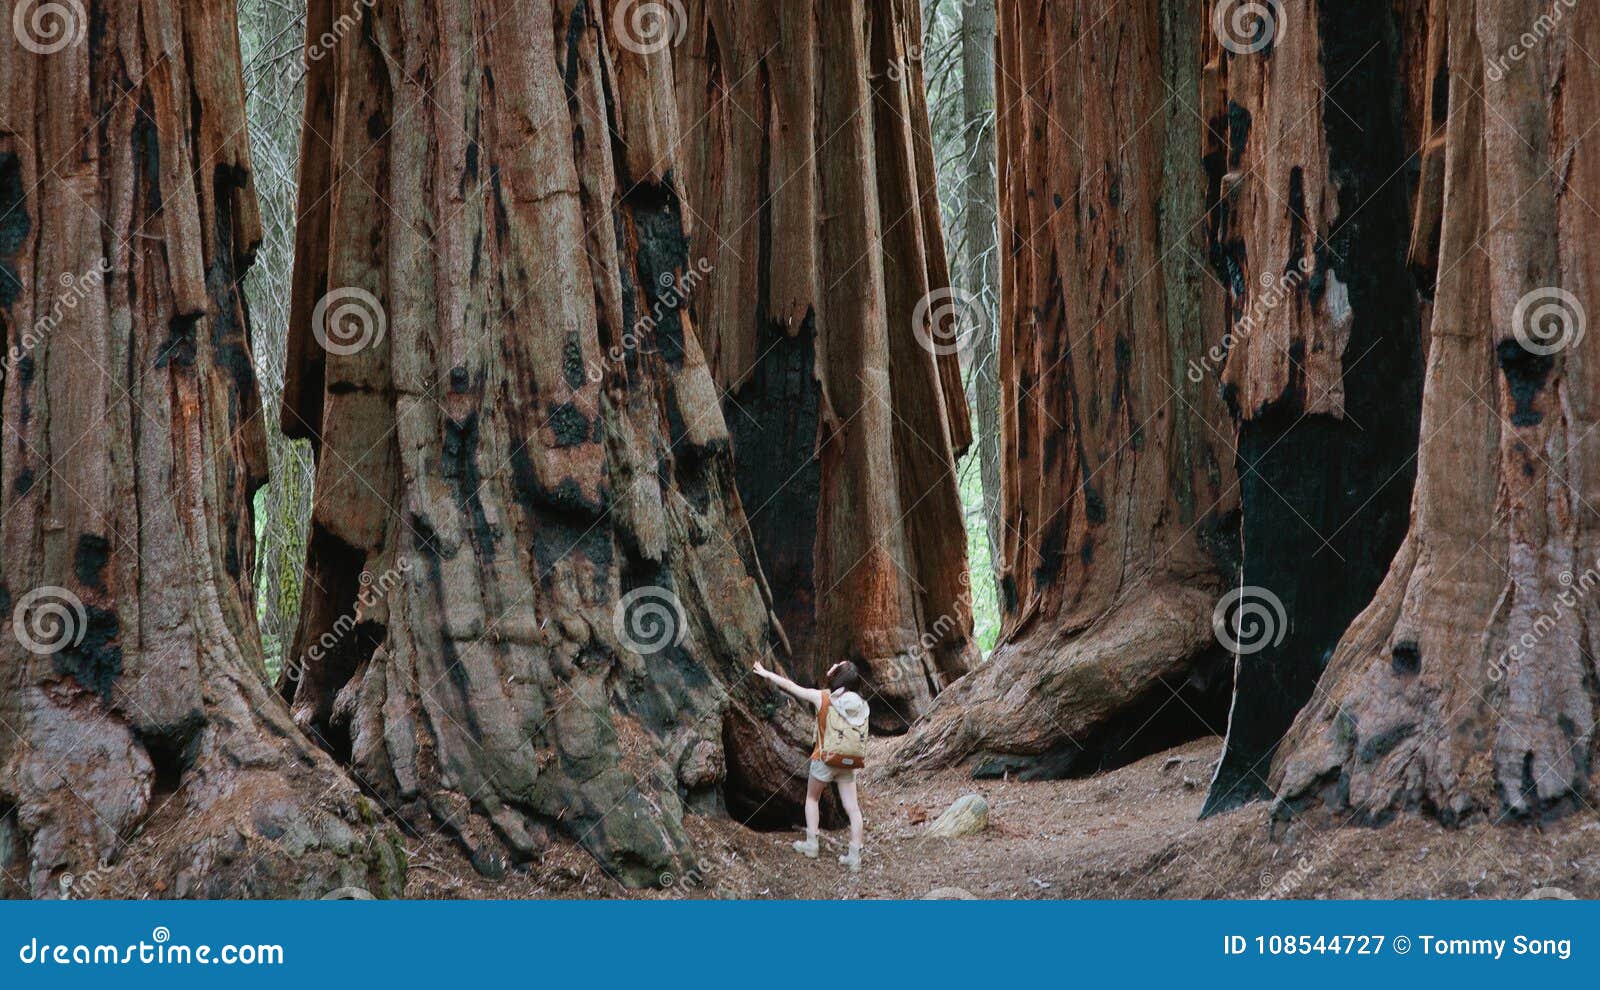 giant sequoias at sequoia national park